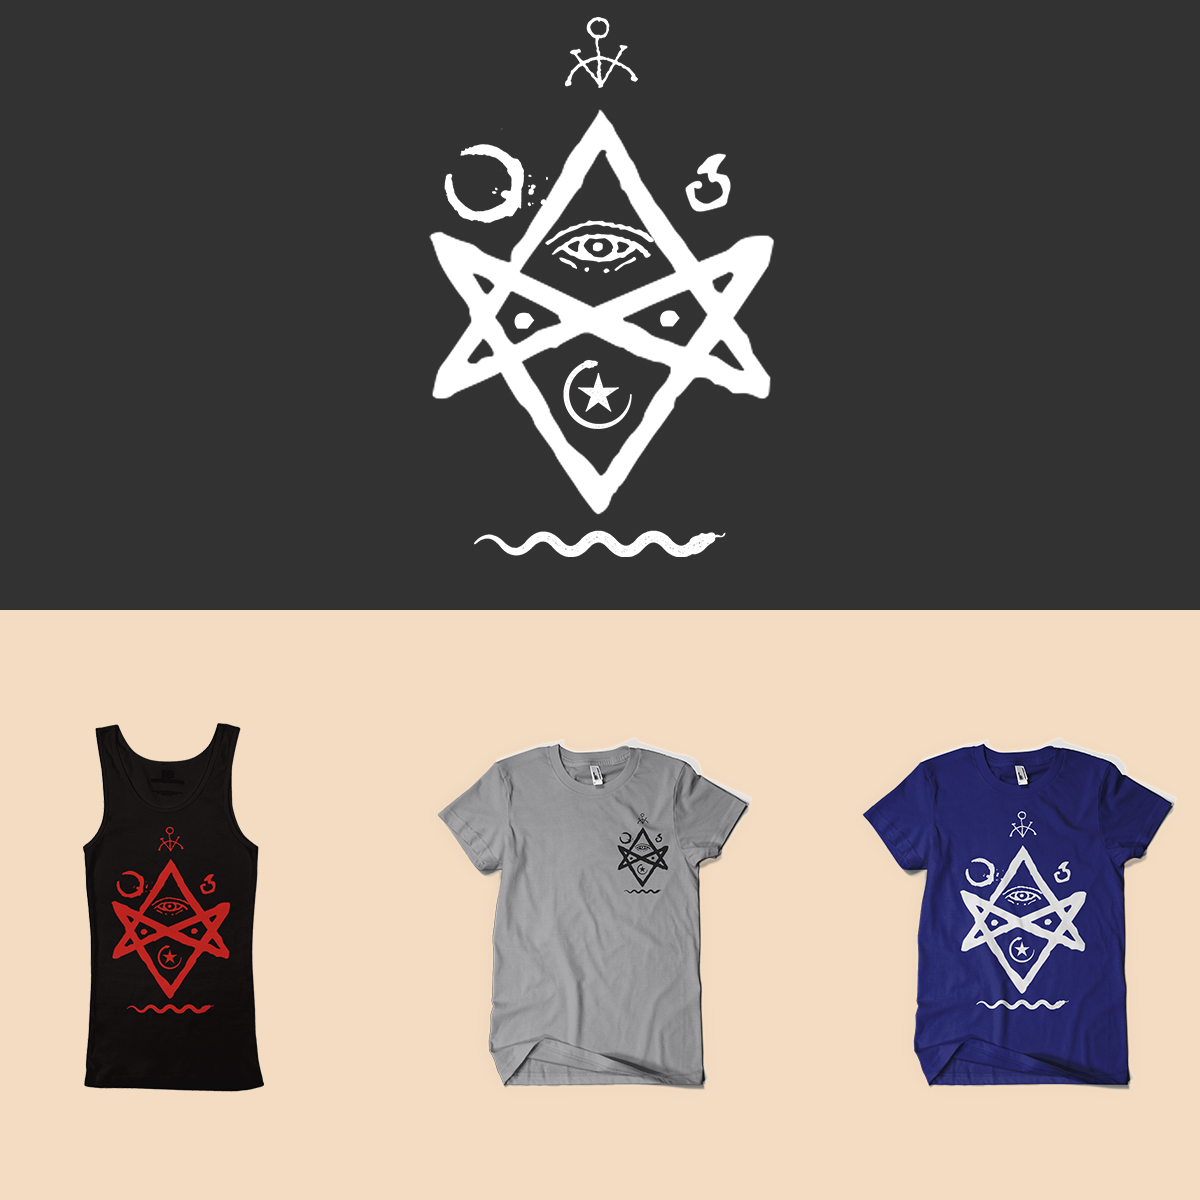 occult demon worship devil triangle eye church shirt apparel